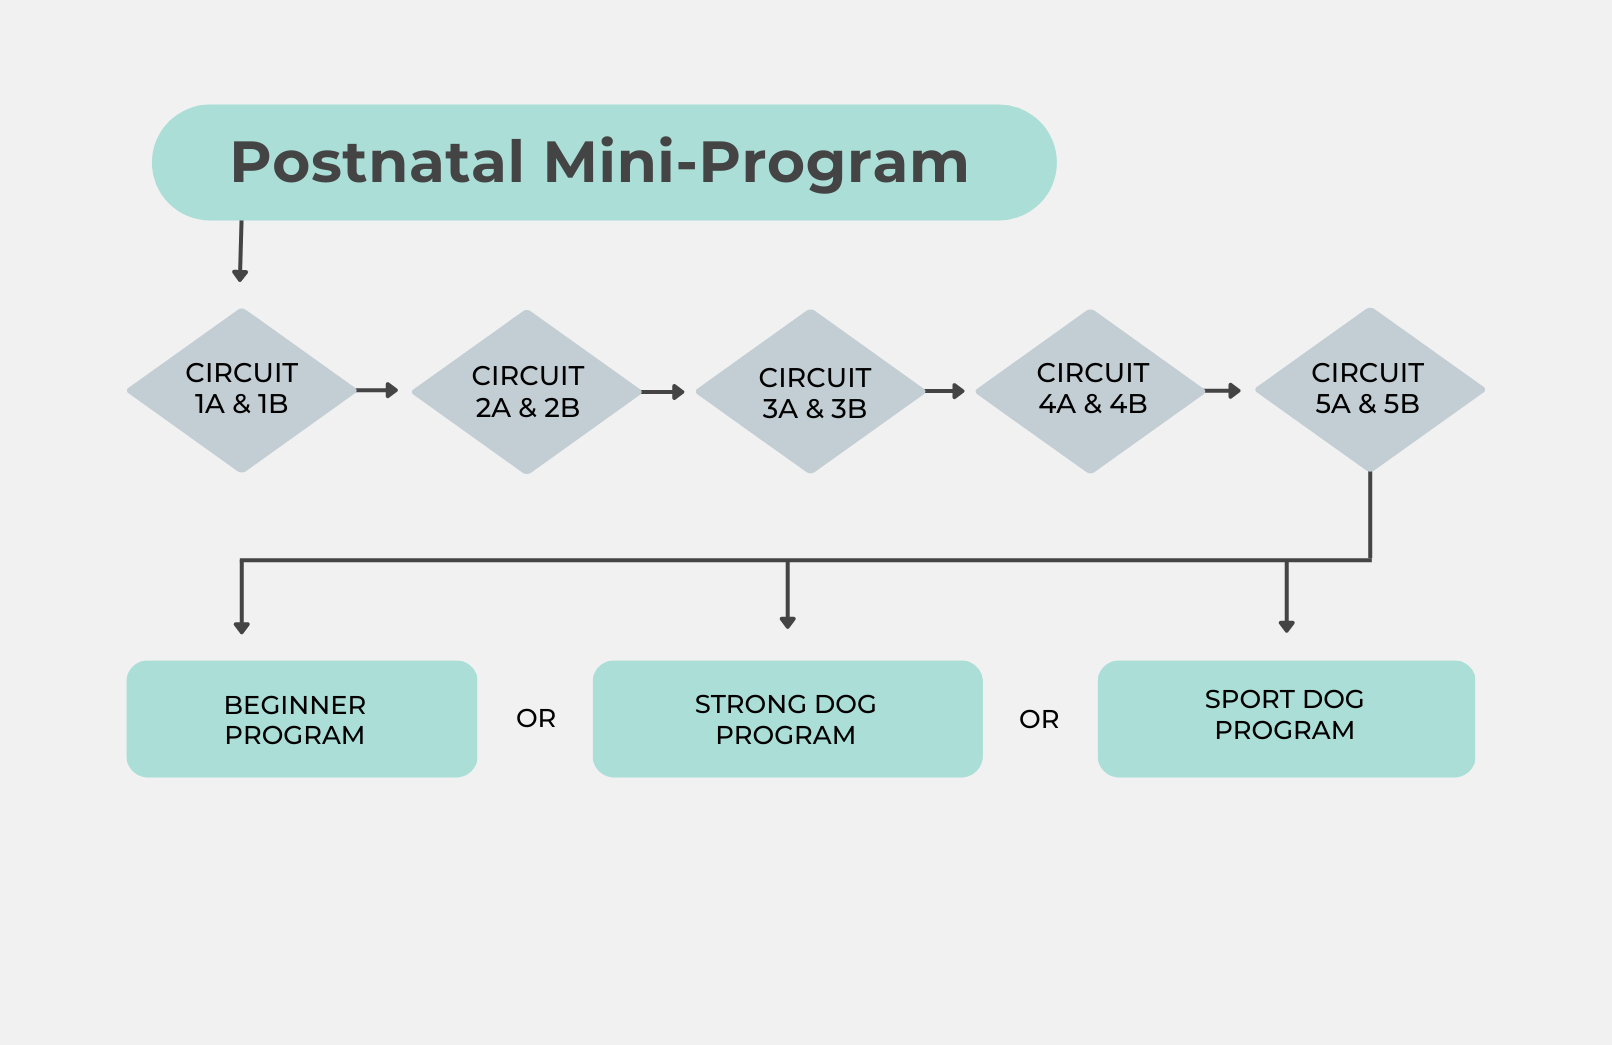 Map showing the circuit progression through the Postnatal Mini-Program